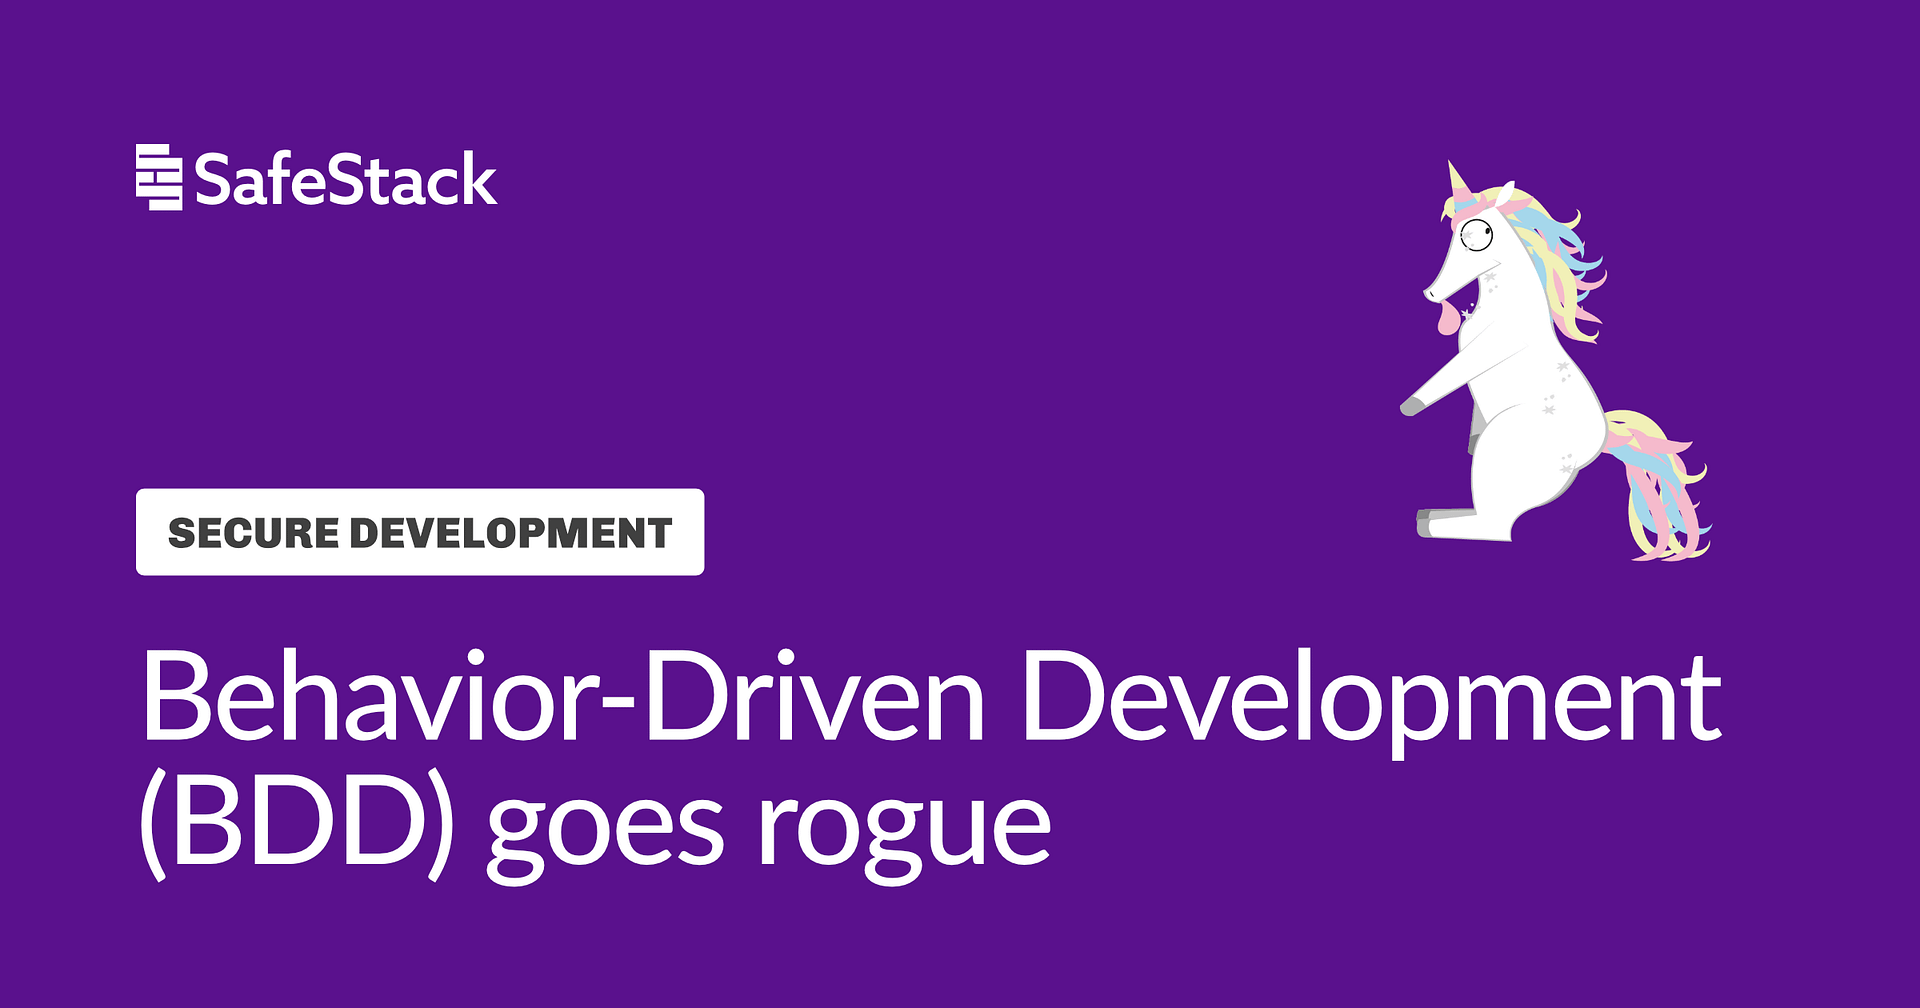 "Behavior-Driven Development (BDD) goes rogue" title with SafeStack mascot.